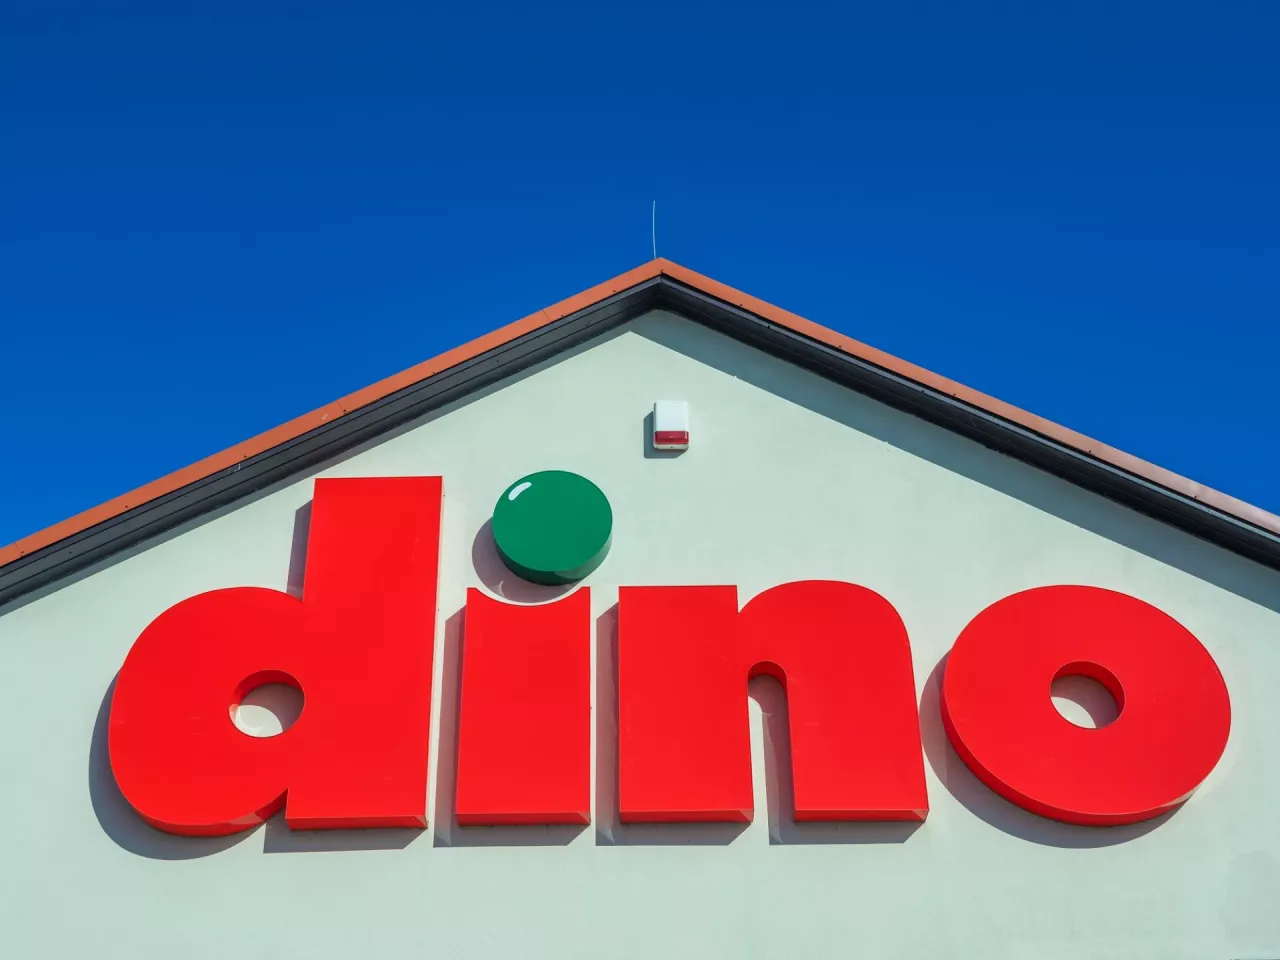 Na zdj. sklep Dino w Niechorzu (fot. Anna_plucinska / Shutterstock)